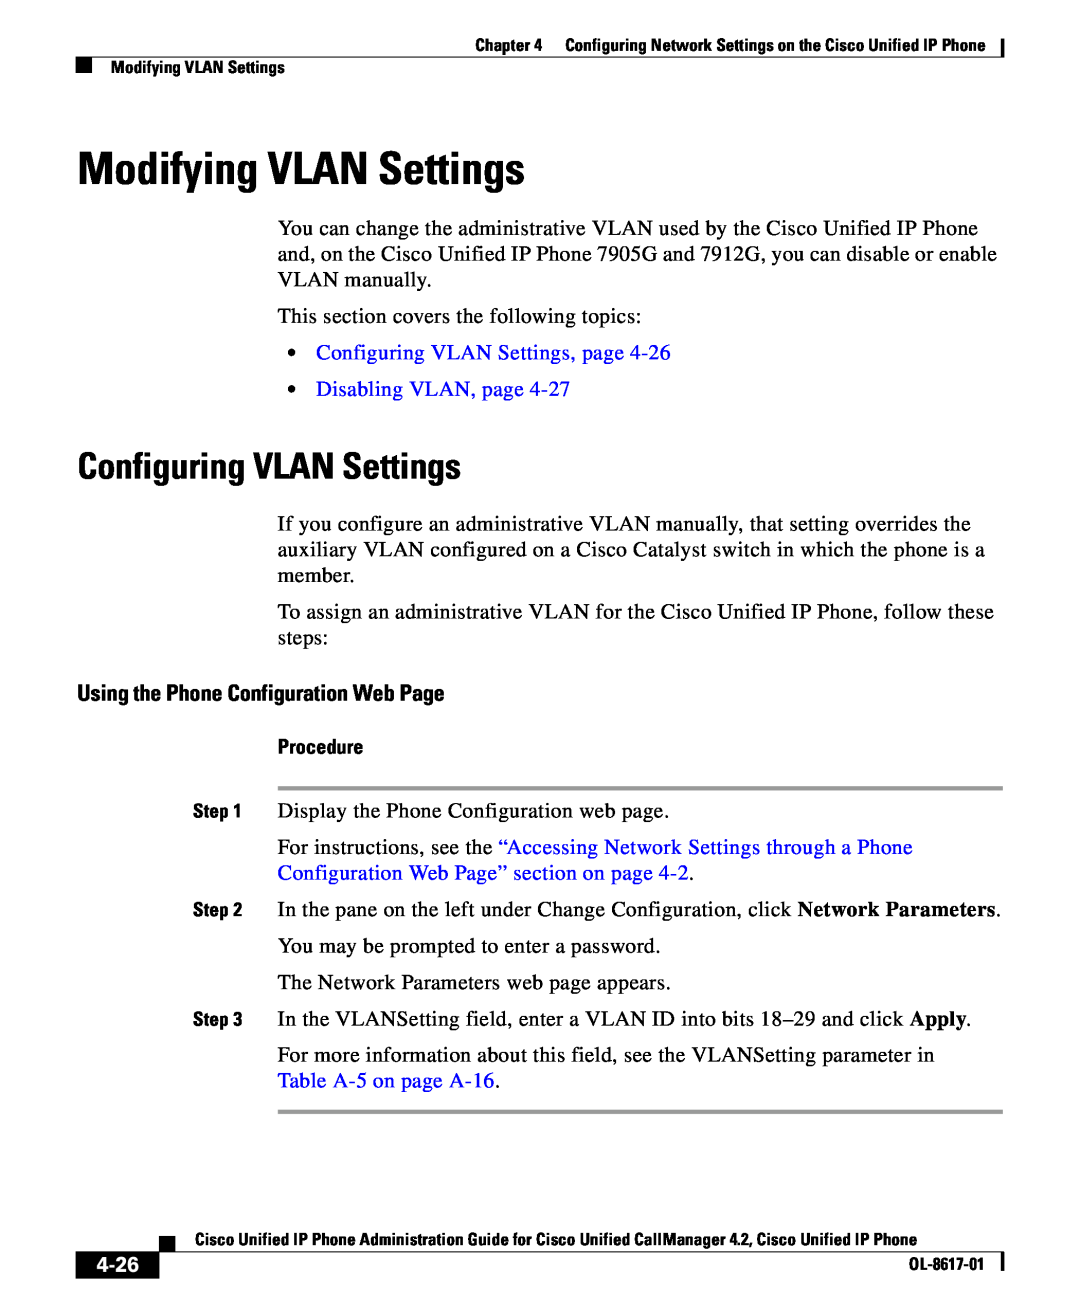 Cisco Systems 4.2 manual Modifying VLAN Settings, Configuring VLAN Settings, page Disabling VLAN, page, 4-26, Procedure 